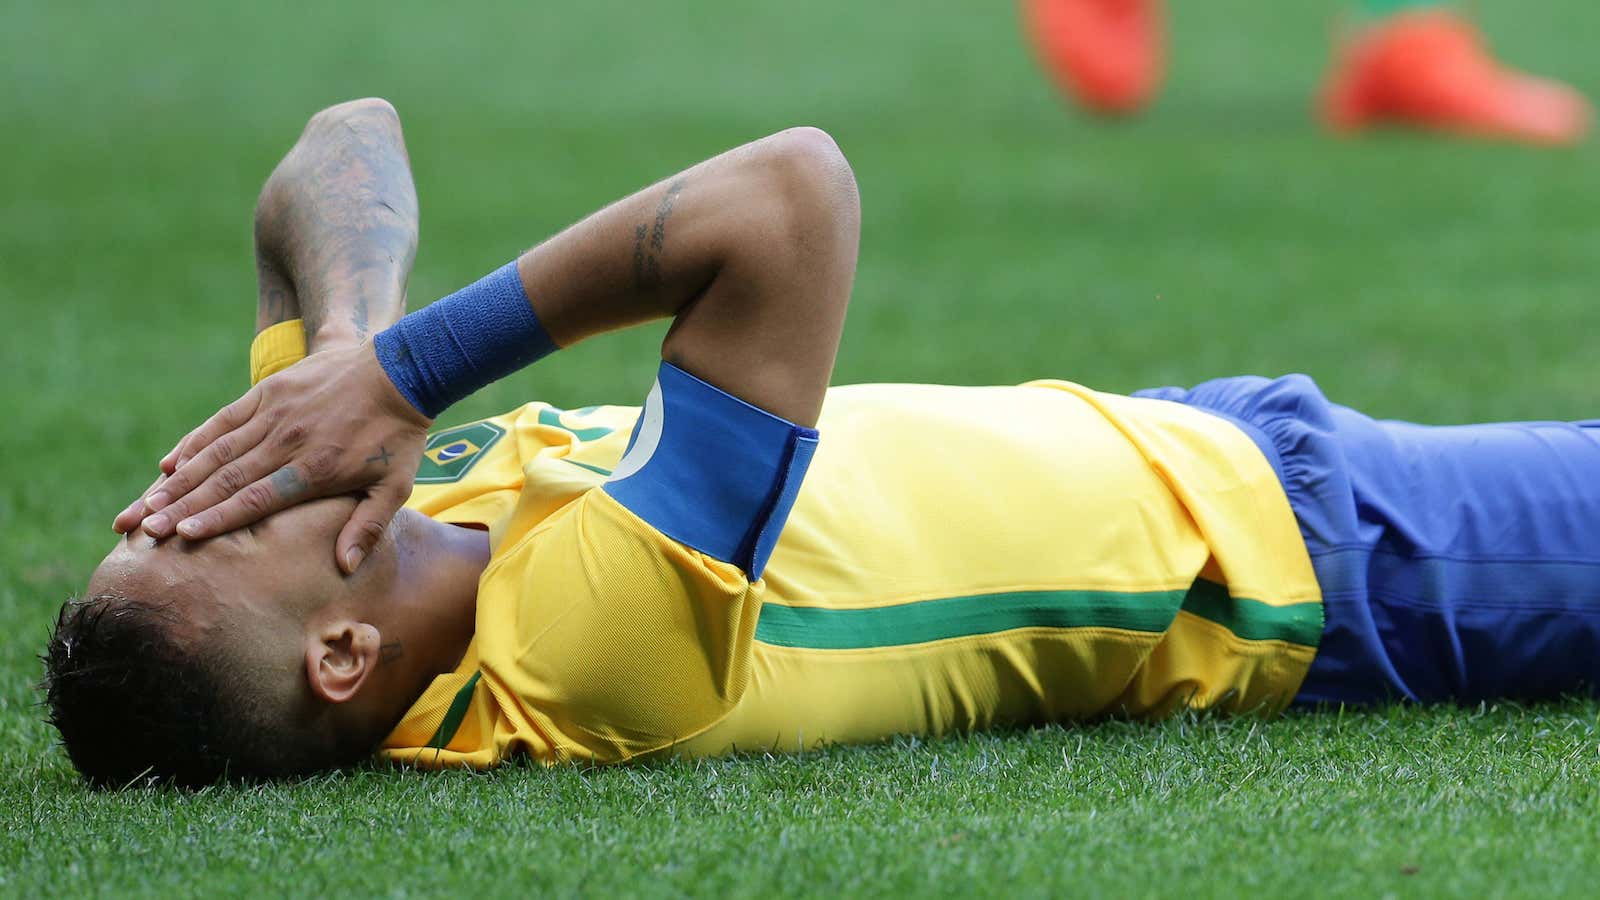 We feel your pain, Neymar.